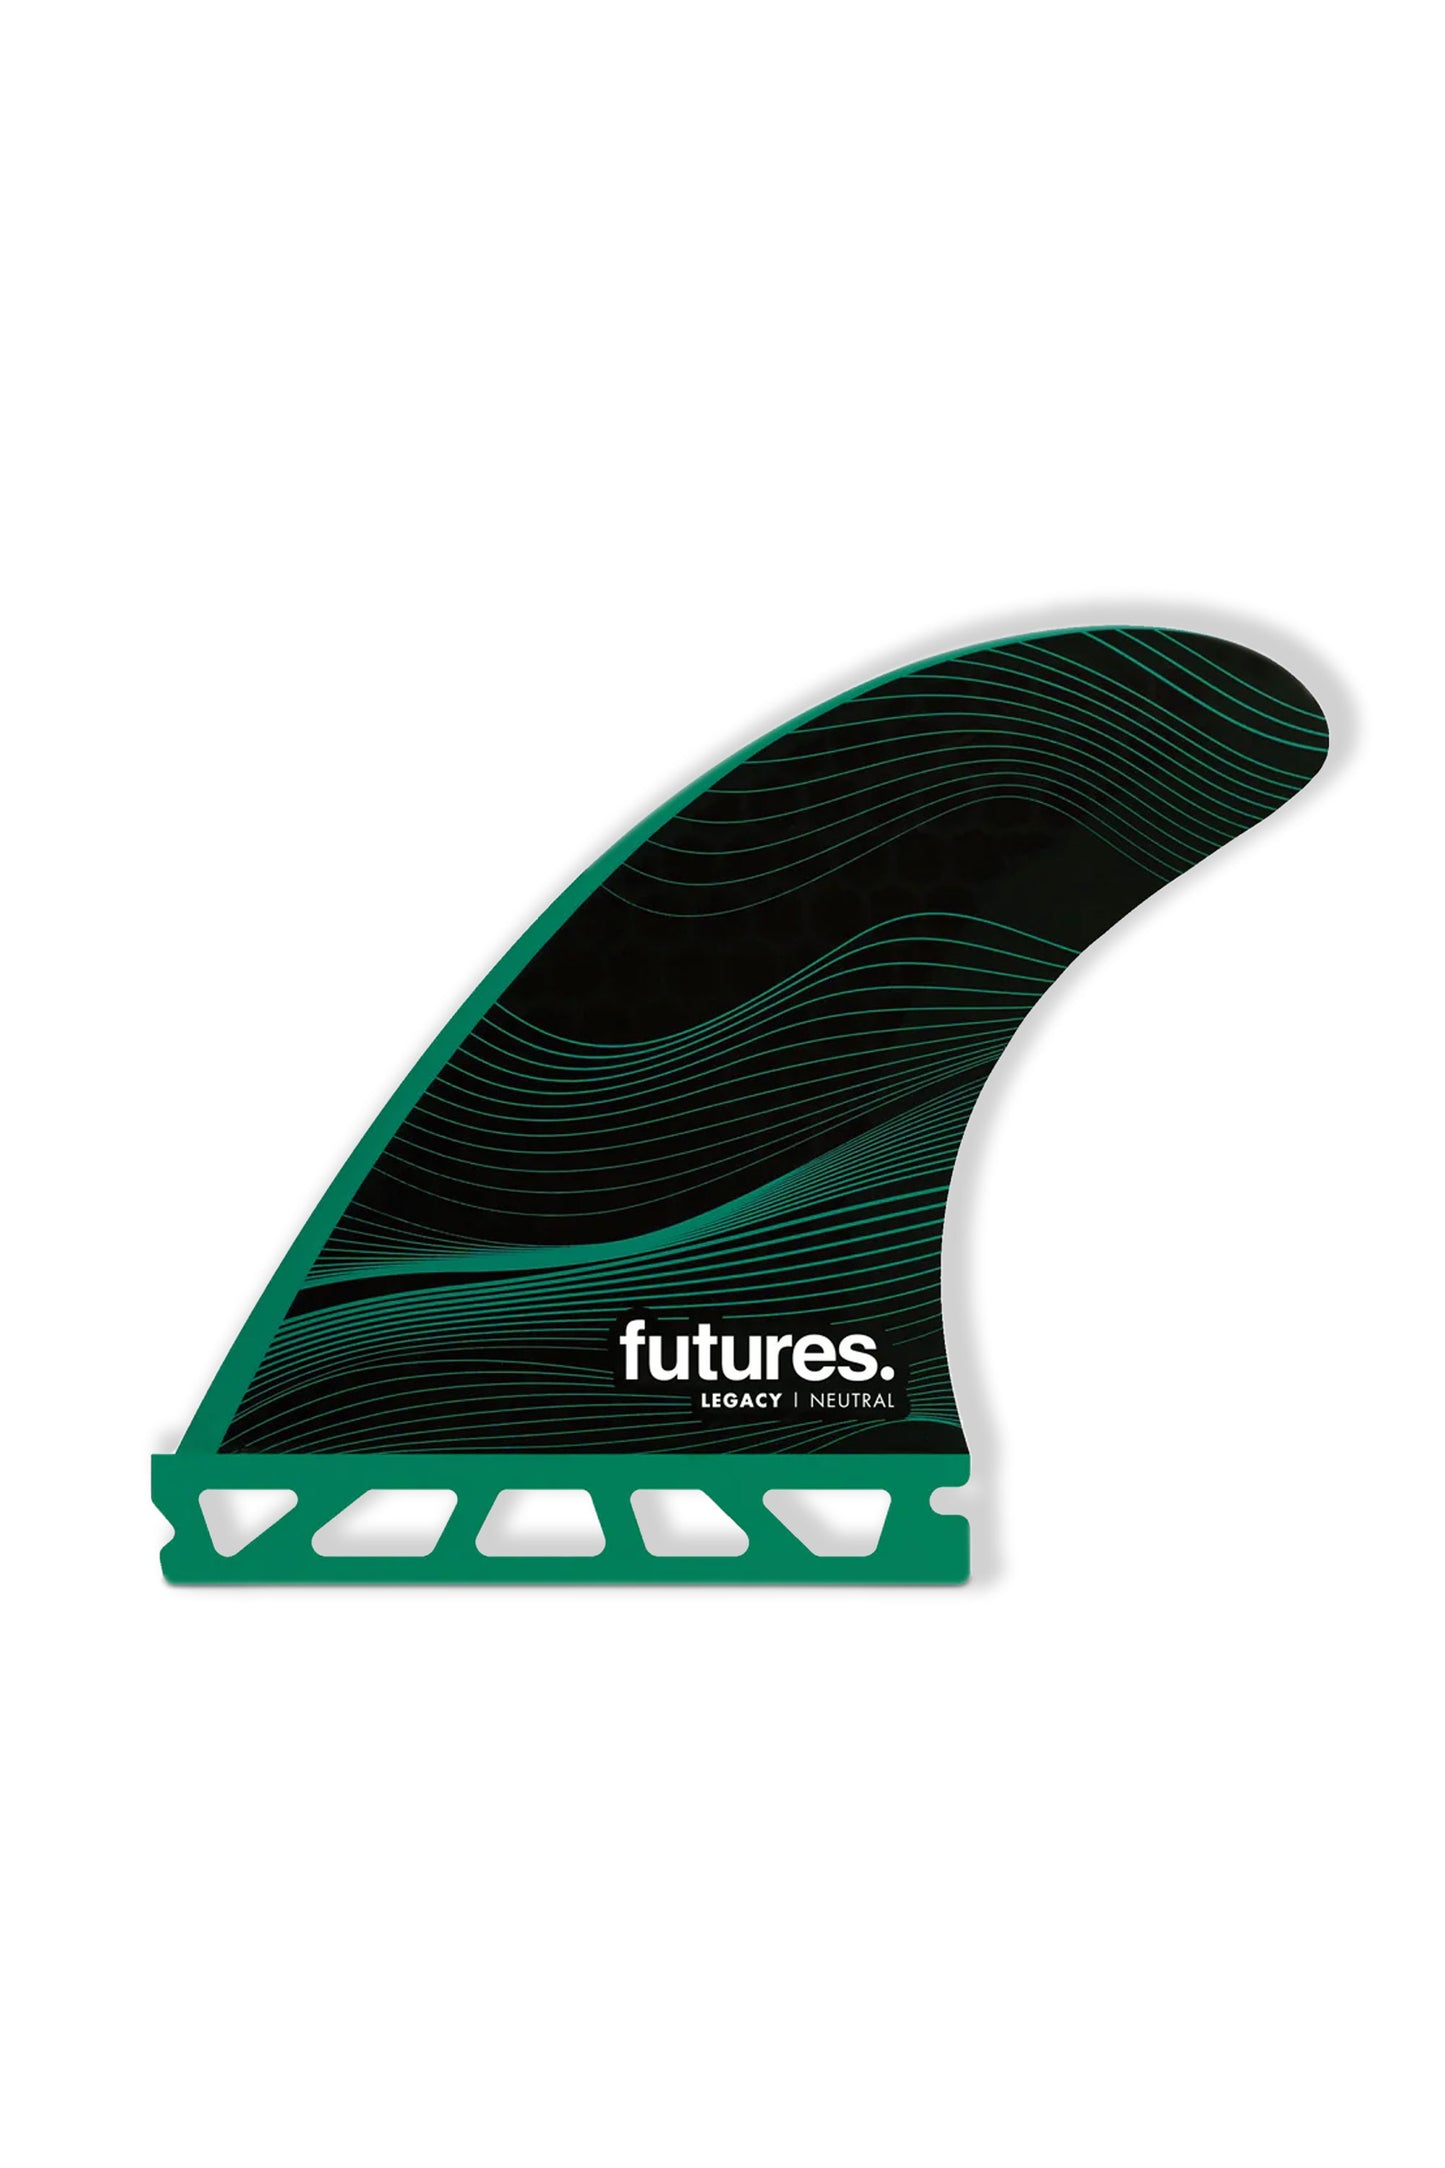 Pukas-Surf-Shop-futures-Fins-F6-legacy-series-green